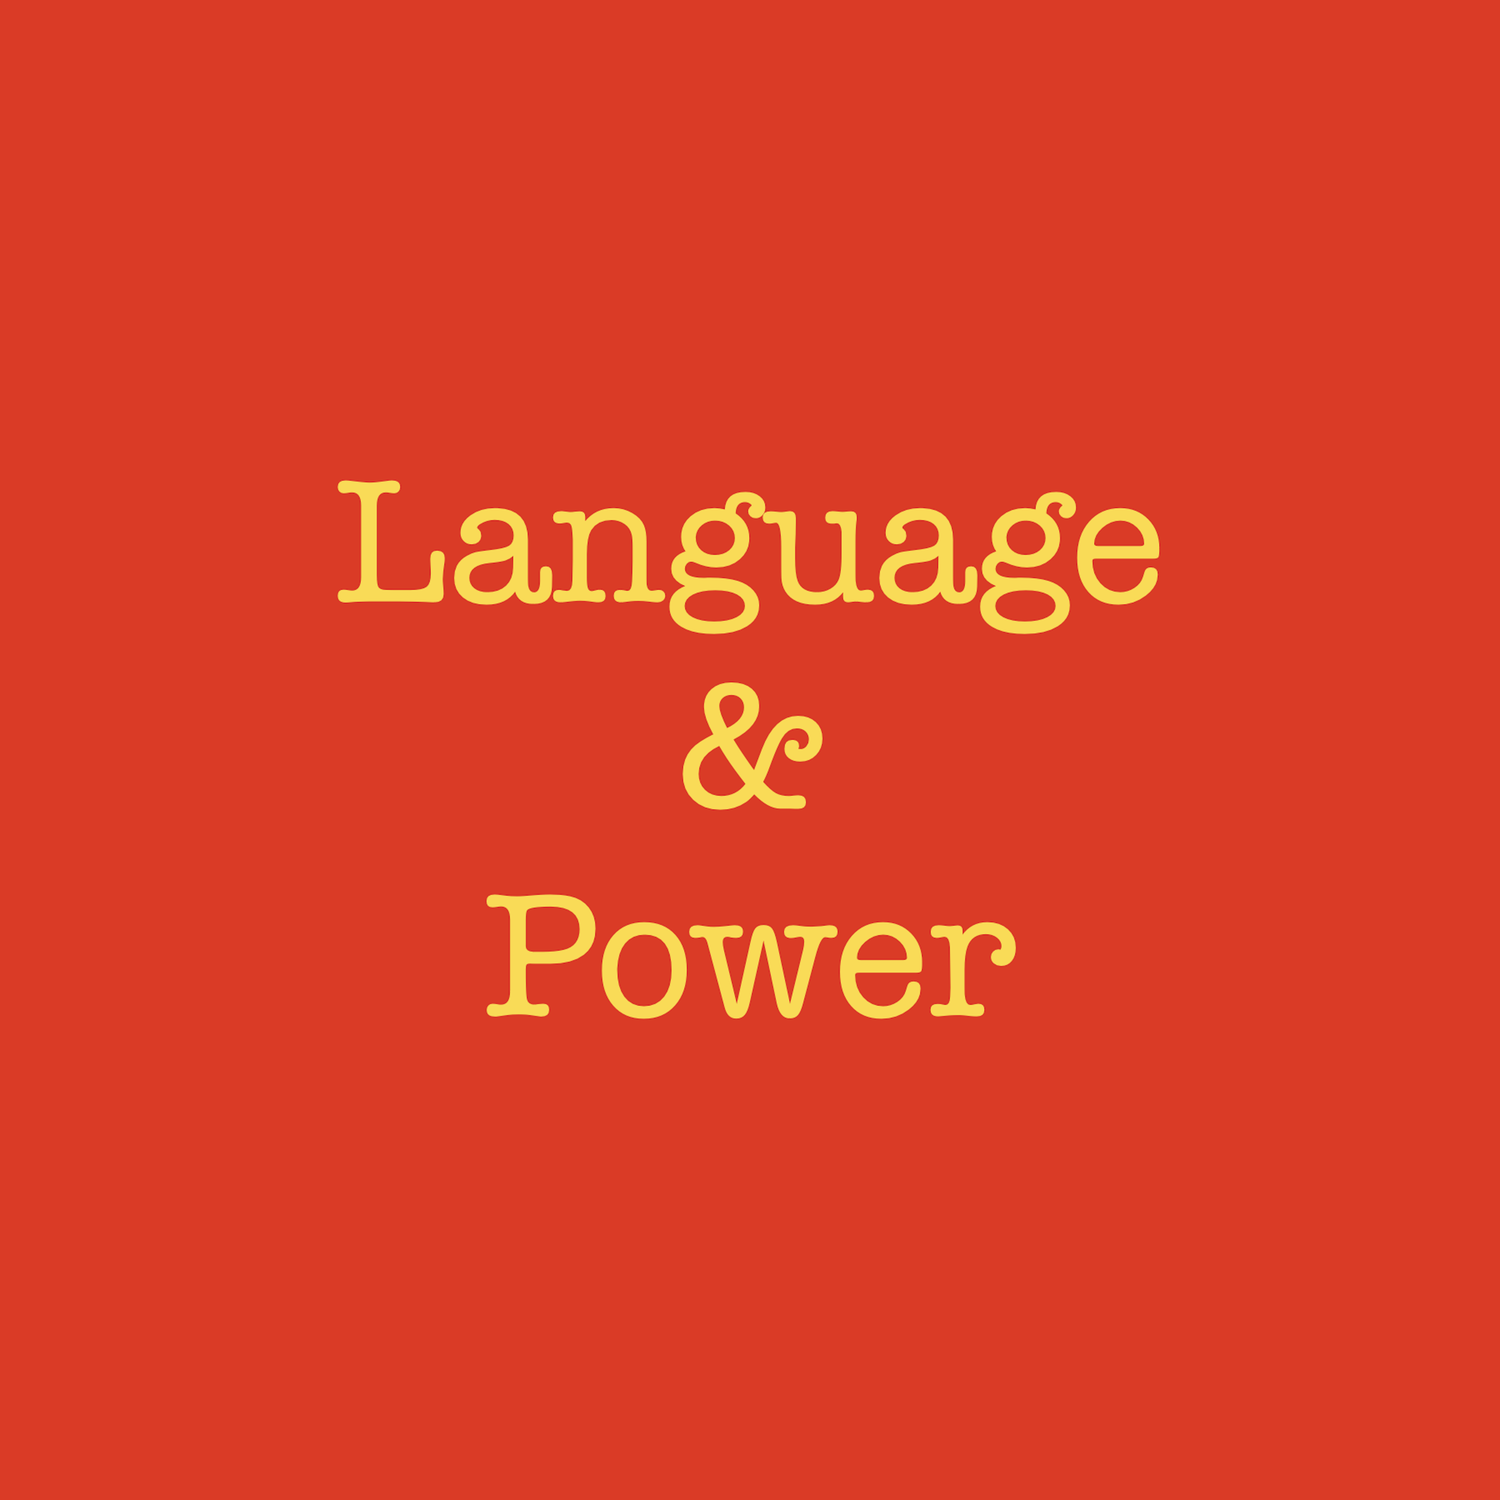 Language/Power Podcast